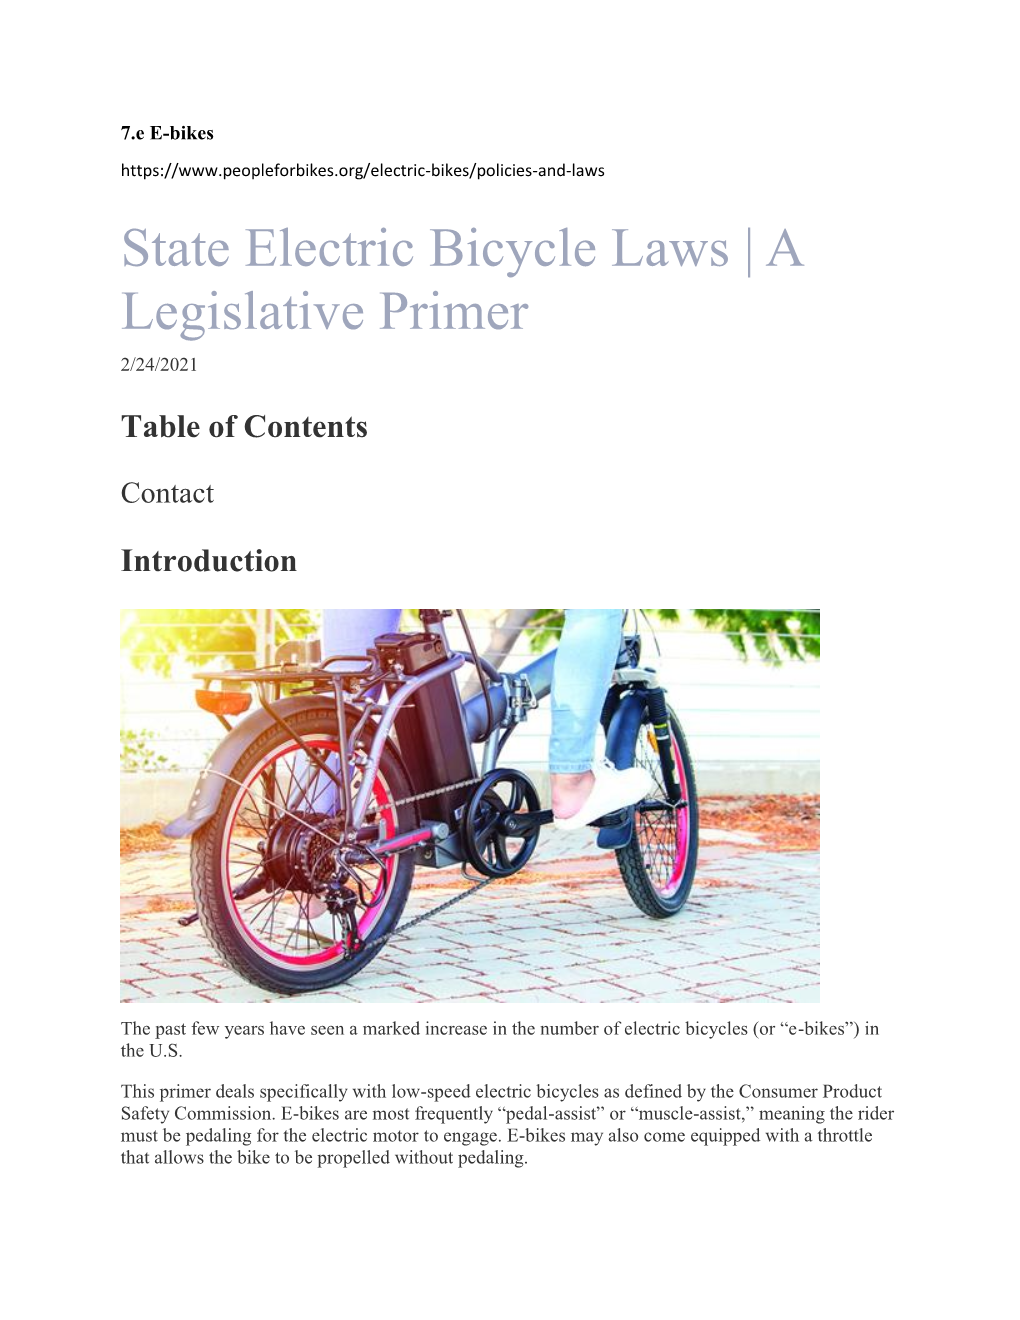 State Electric Bicycle Laws | a Legislative Primer 2/24/2021